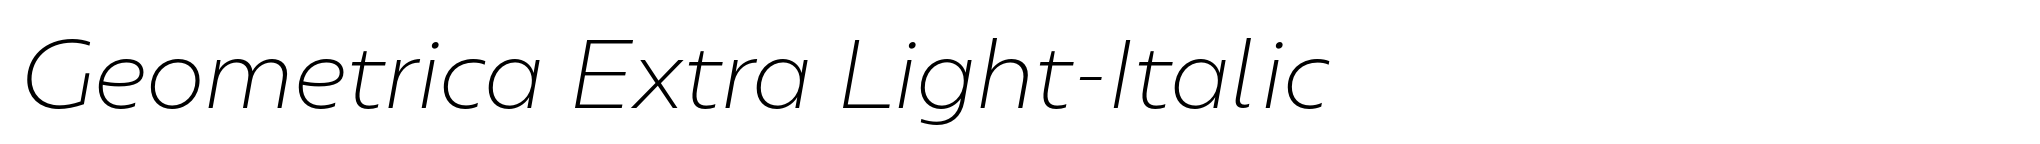 Geometrica Extra Light-Italic image